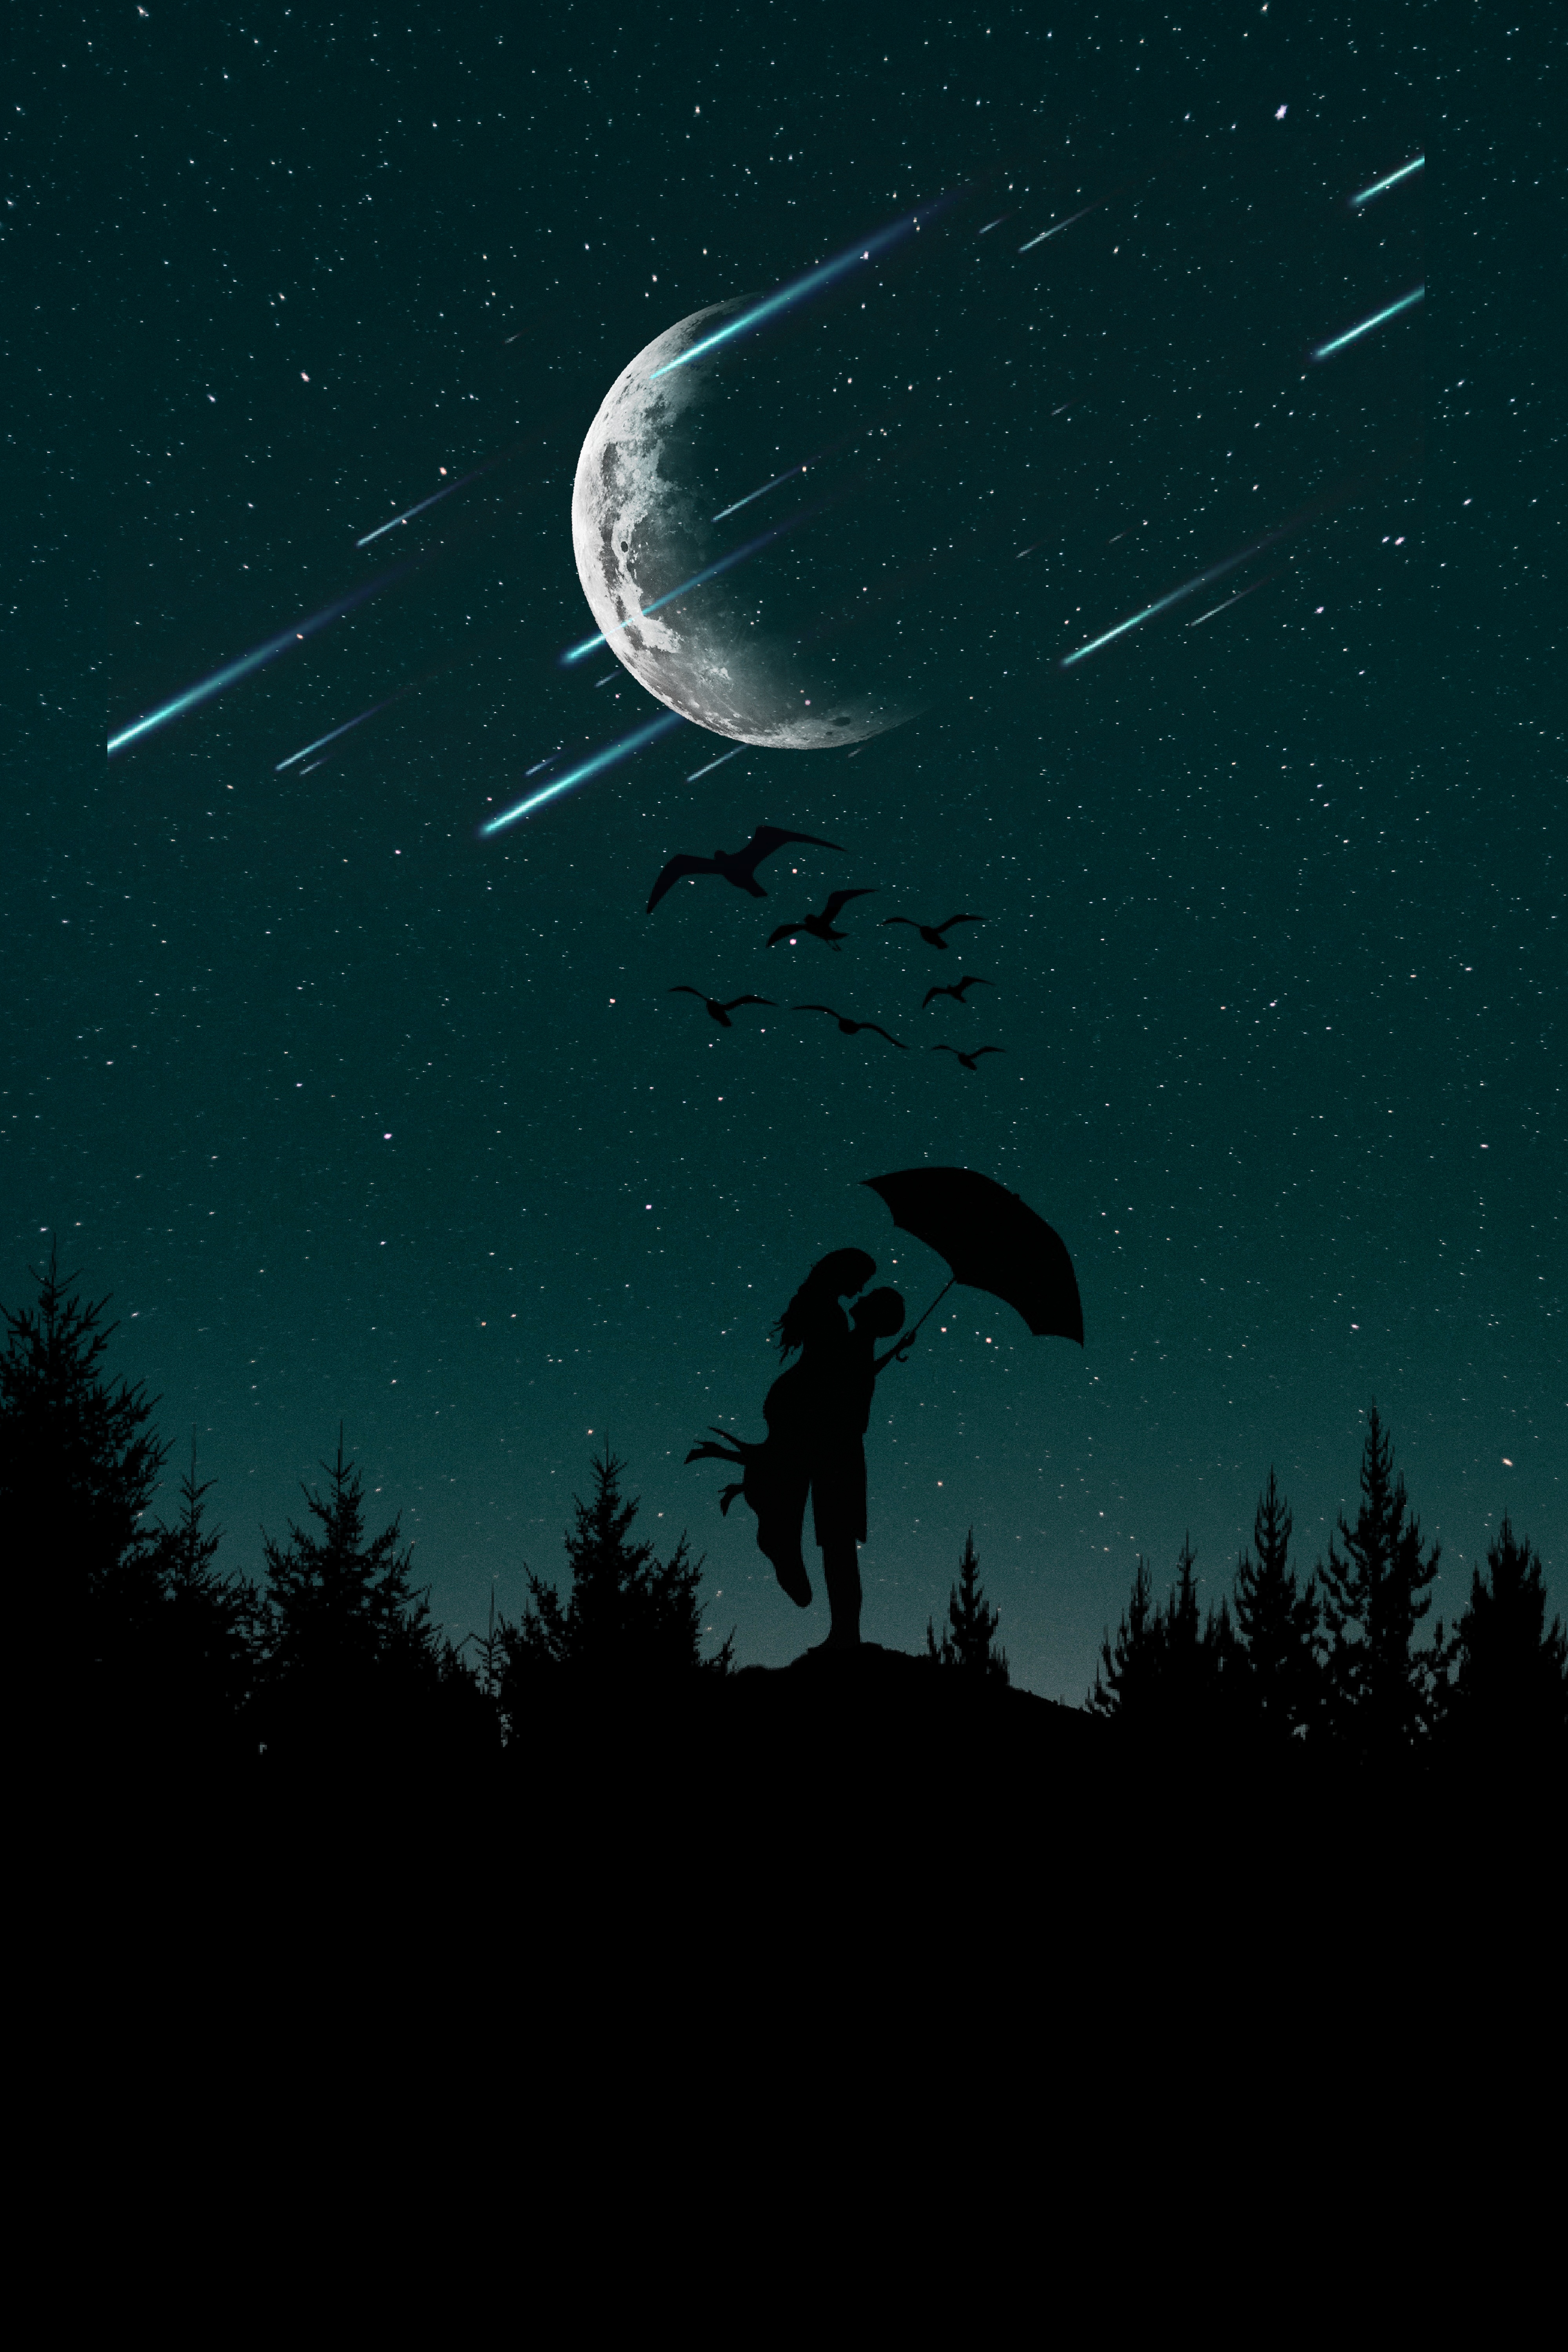 couple, love, moon, pair, starry sky, trees, night, silhouettes, umbrella